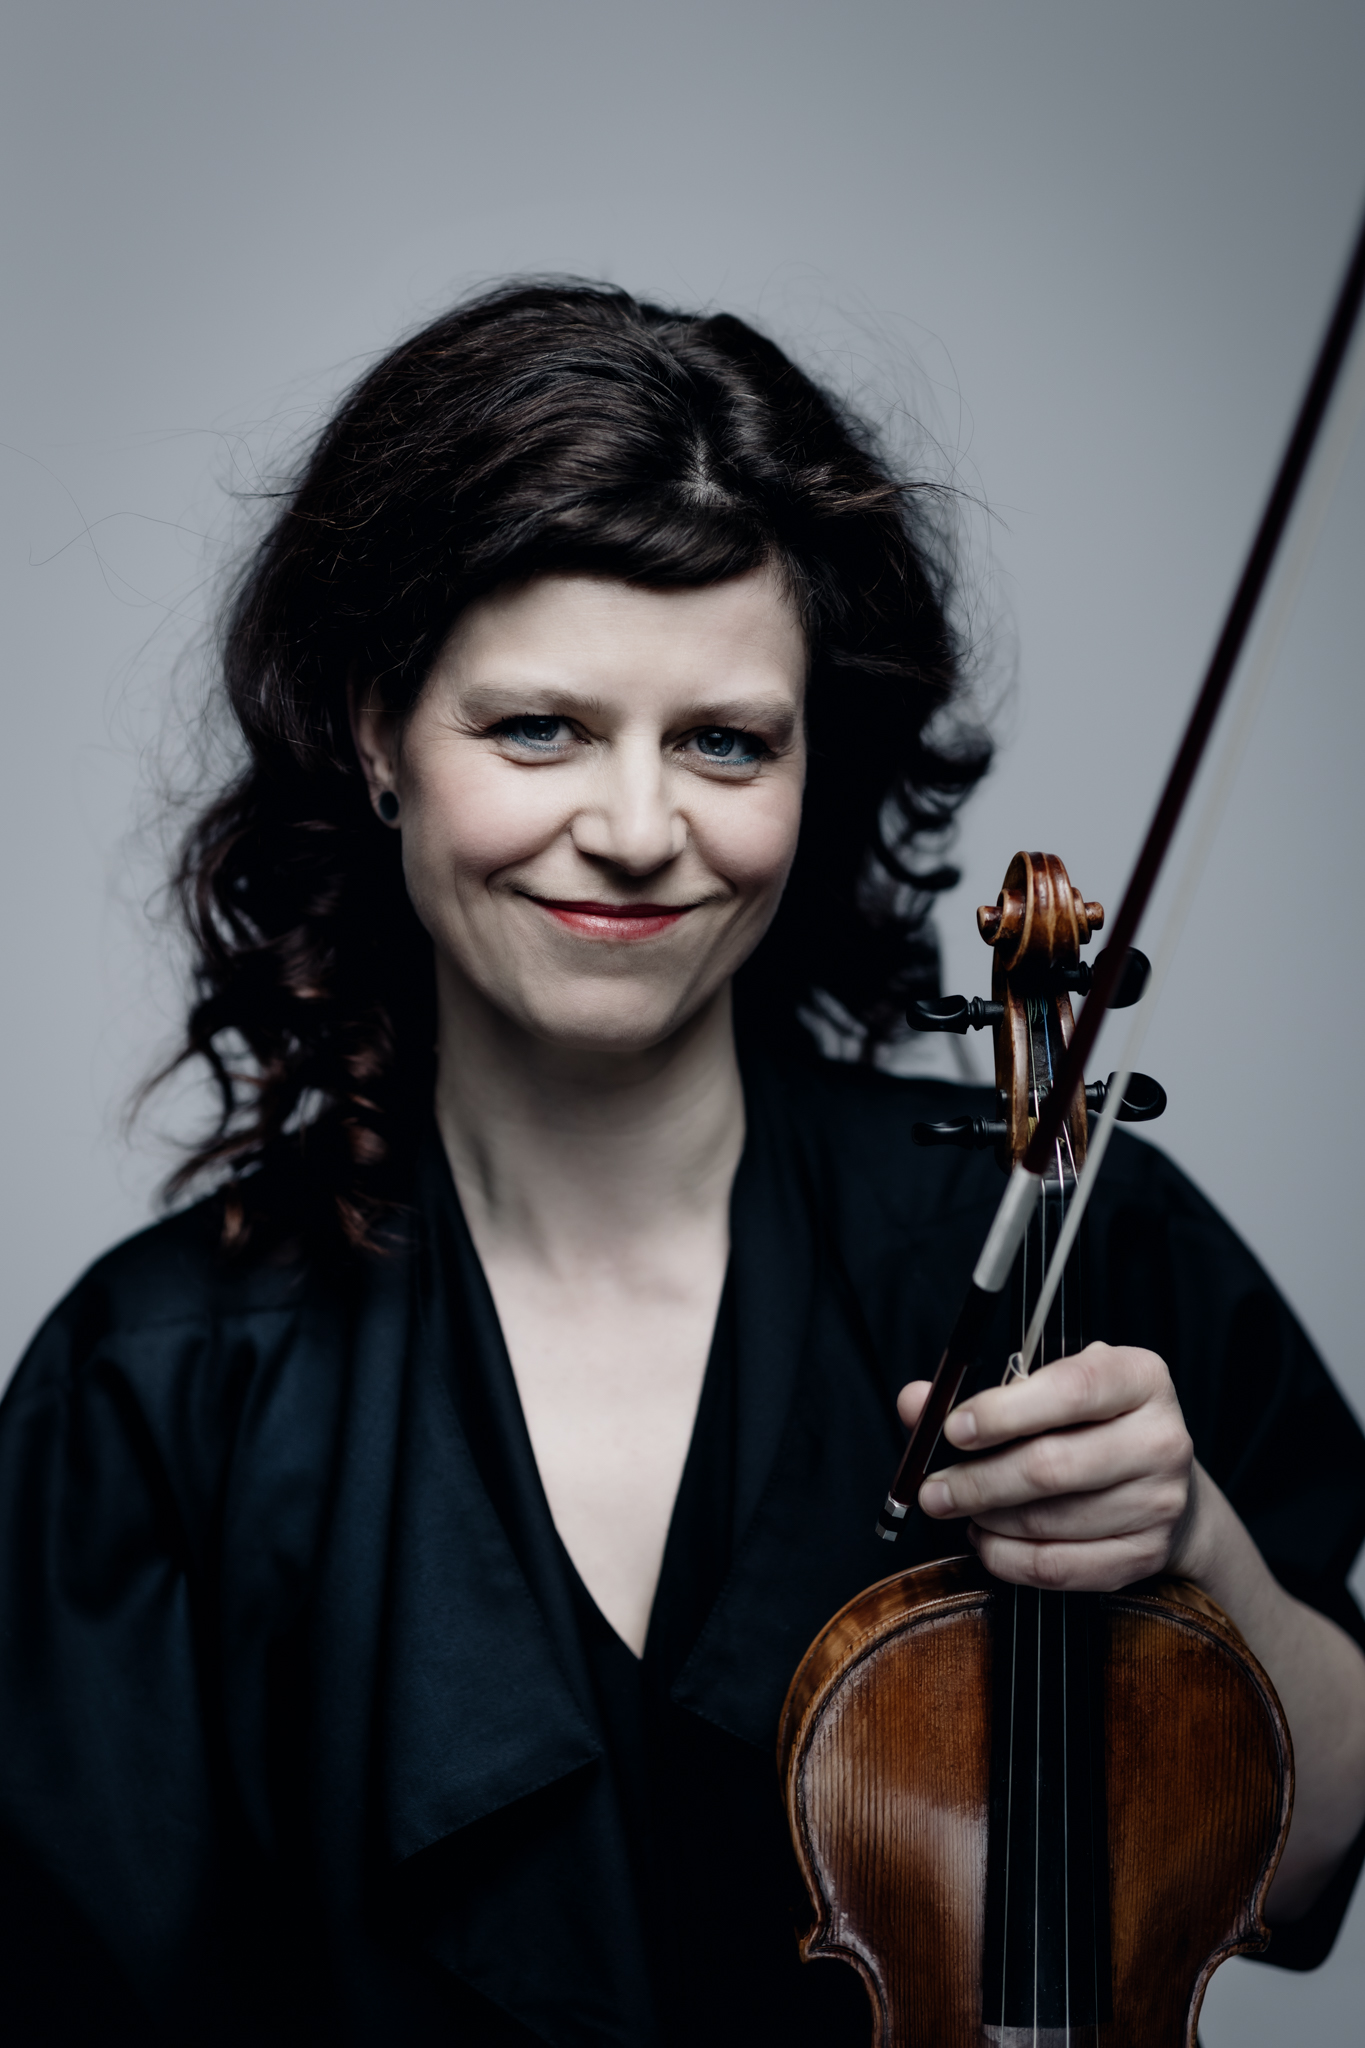 Susanne Zapf - Violinist Performer - Farbe 1